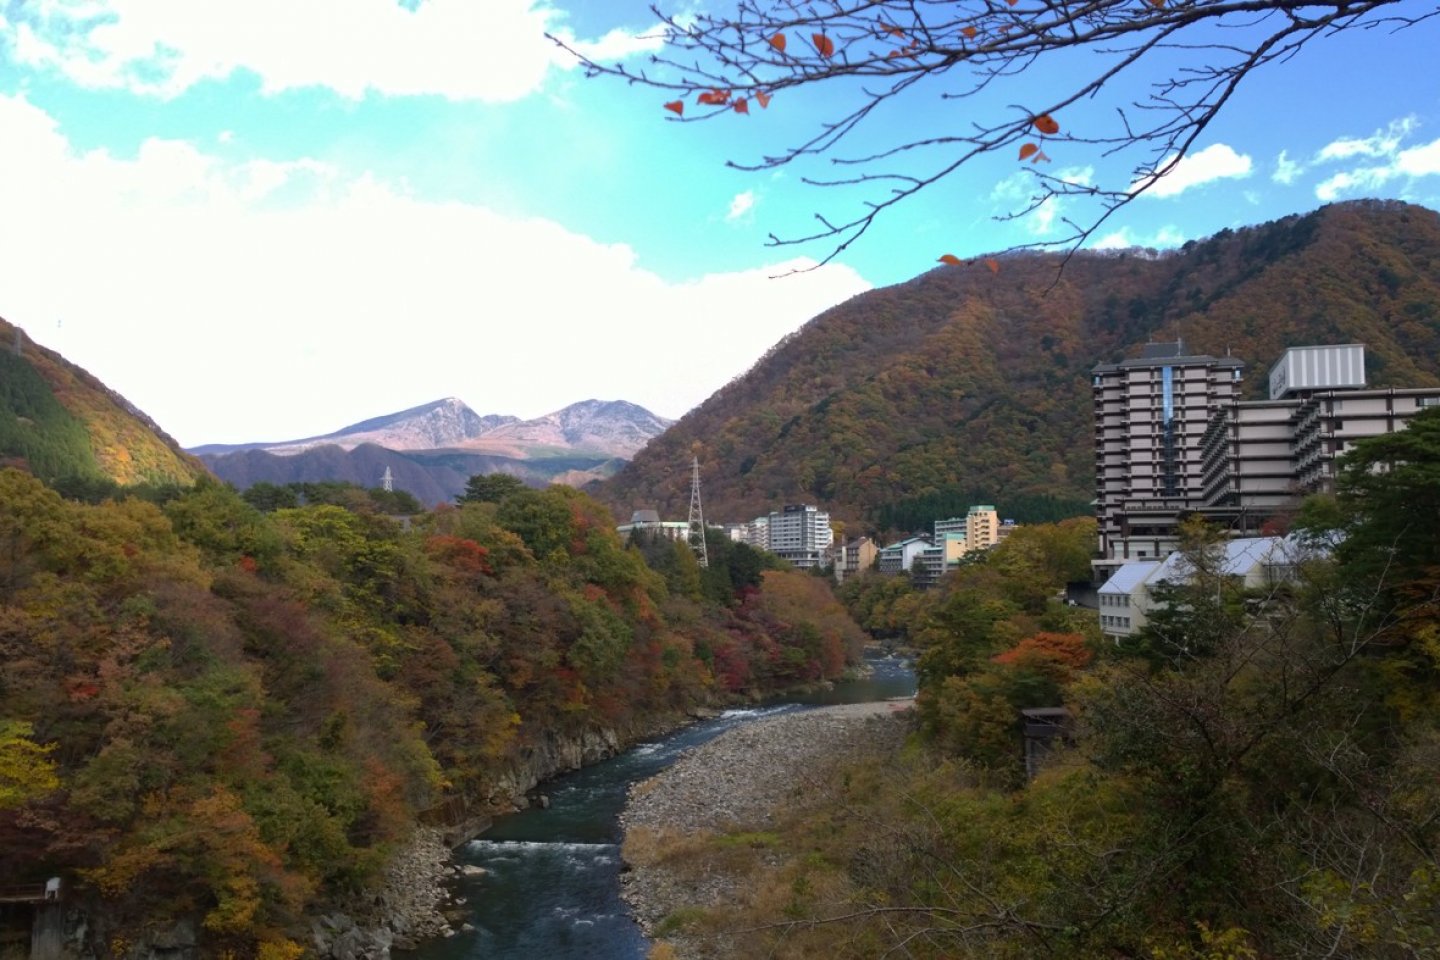 Kinugawa Onsen (鬼怒川温泉) เมืองแห่งออนเซนชื่อดังที่อยู่ไม่ไกลโตเกียวนัก สามารถนั่งรถไฟจากโตเกียวไปแช่น้ำร้อนสบายๆ ได้ในเวลาเพียง 1-2 ชั่วโมงเท่านั้น ซึ่งเมืองแห่งบ่อน้ำร้อนแห่งนี้ตั้งอยู่ริมแม่น้ำคินุ (Kinu River) ใน จ.โทชิกิ (Tochigi)